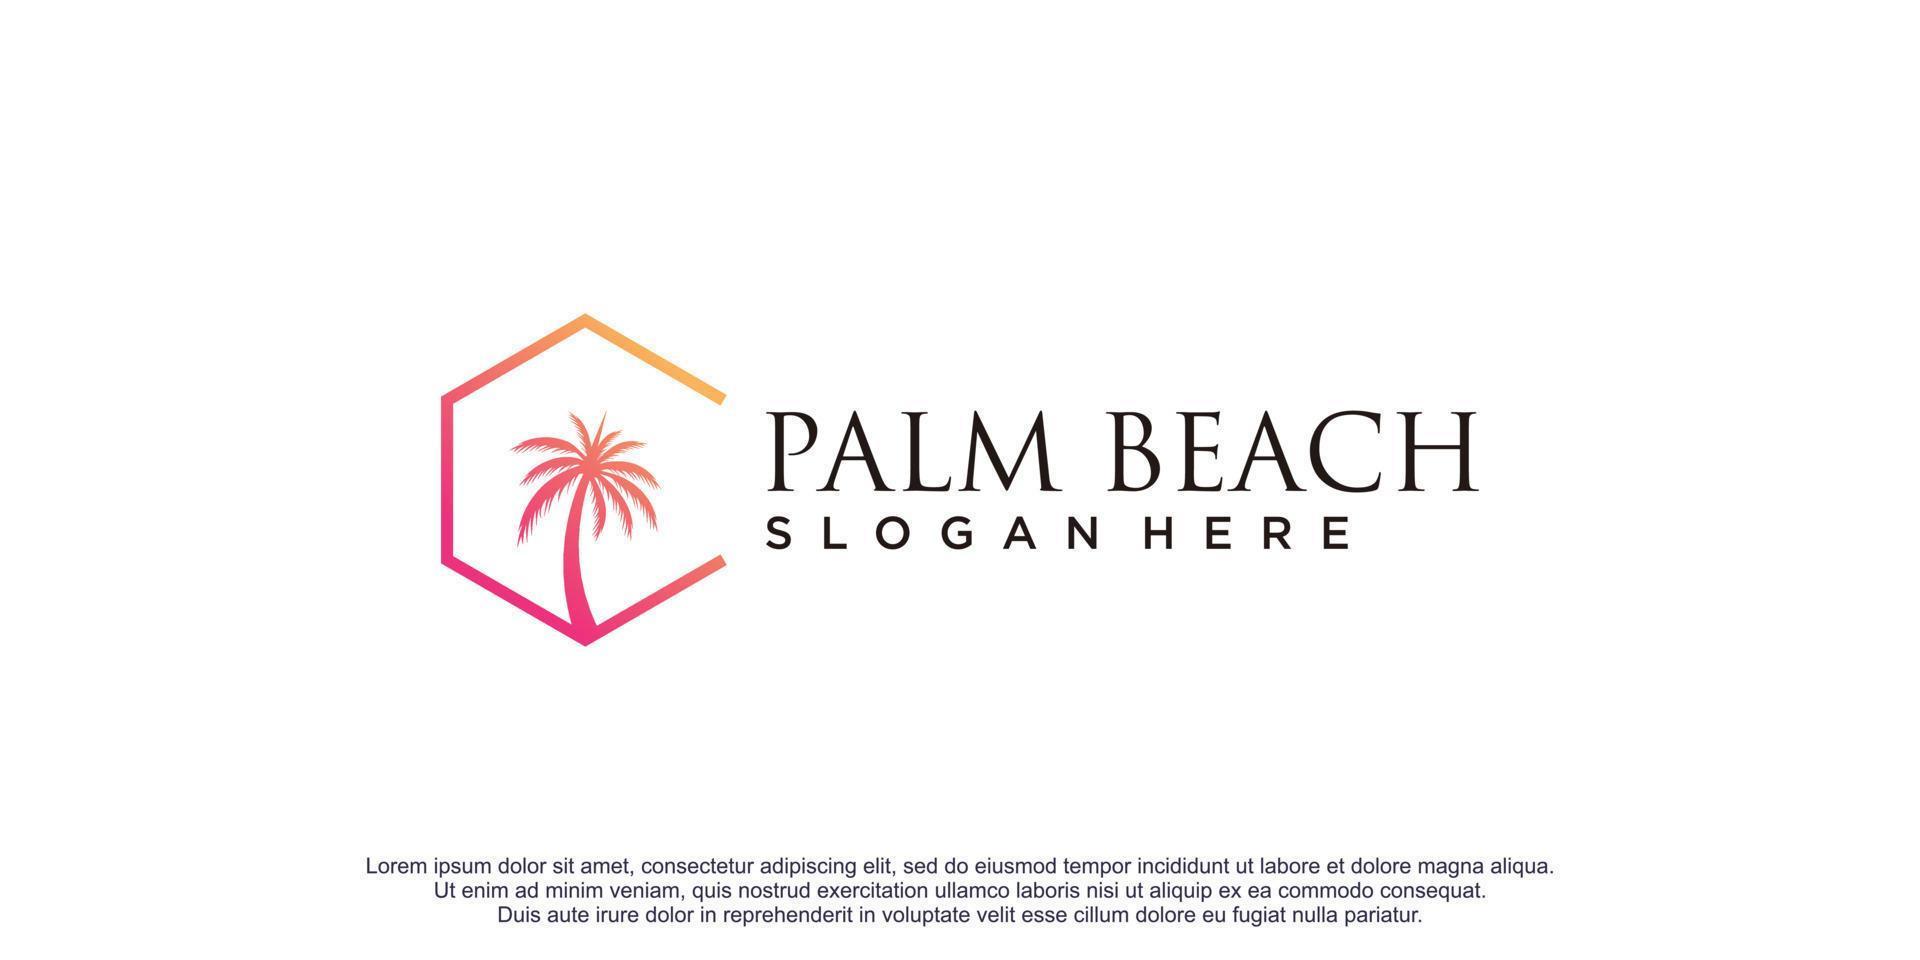 Palm beach logo with hexagon element design icon vector illustration